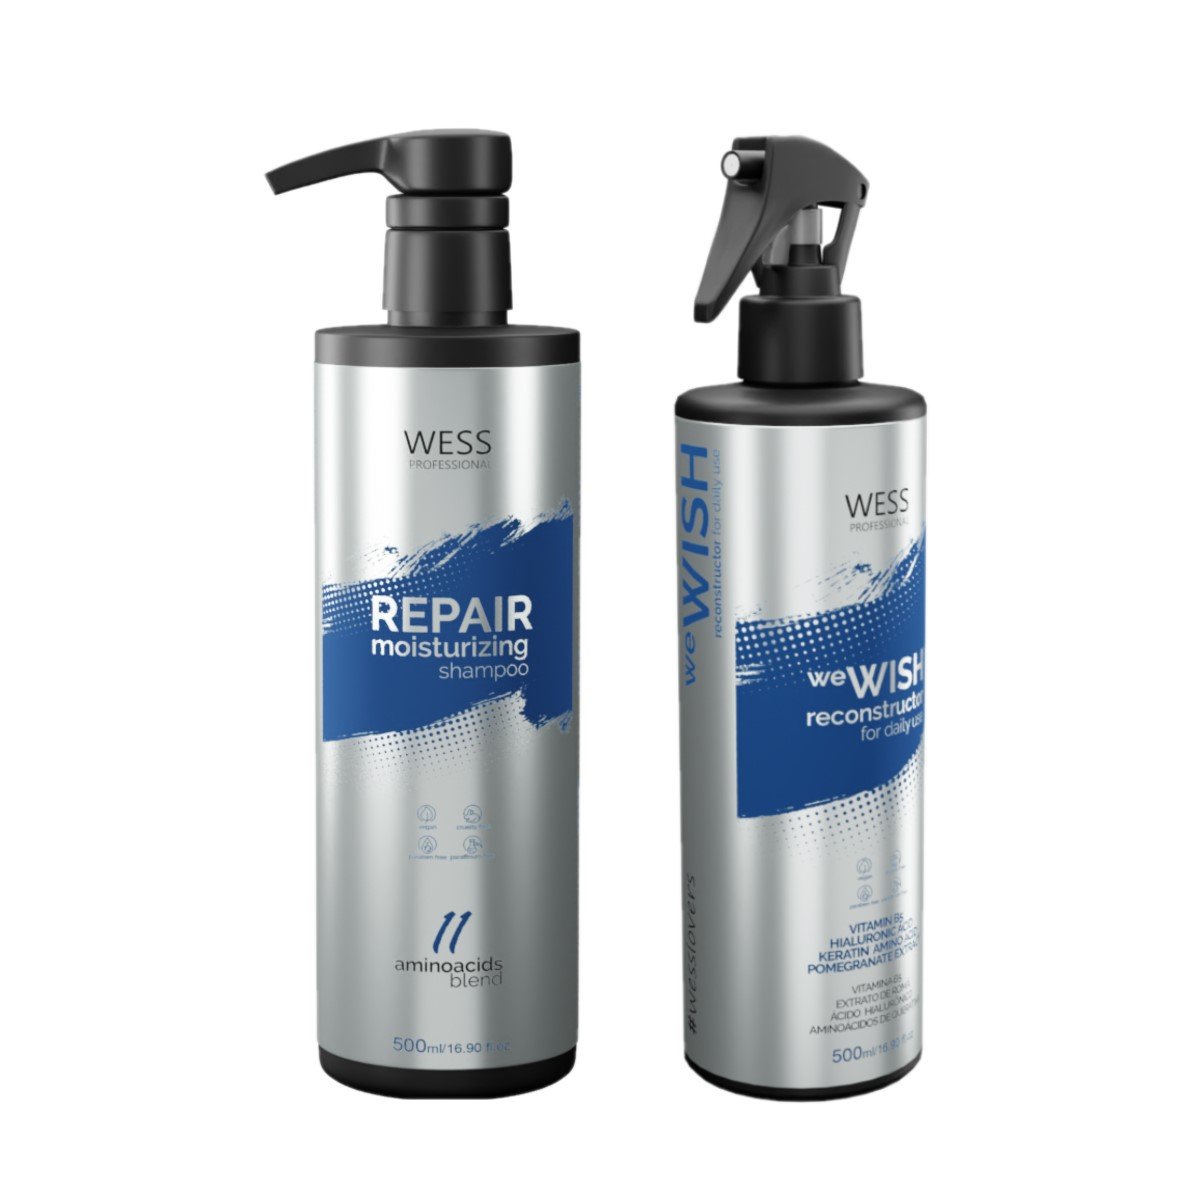 Kit Wess Repair Shampoo 500ml + We Wish Reconstrutor 500ml ÚNICO 1